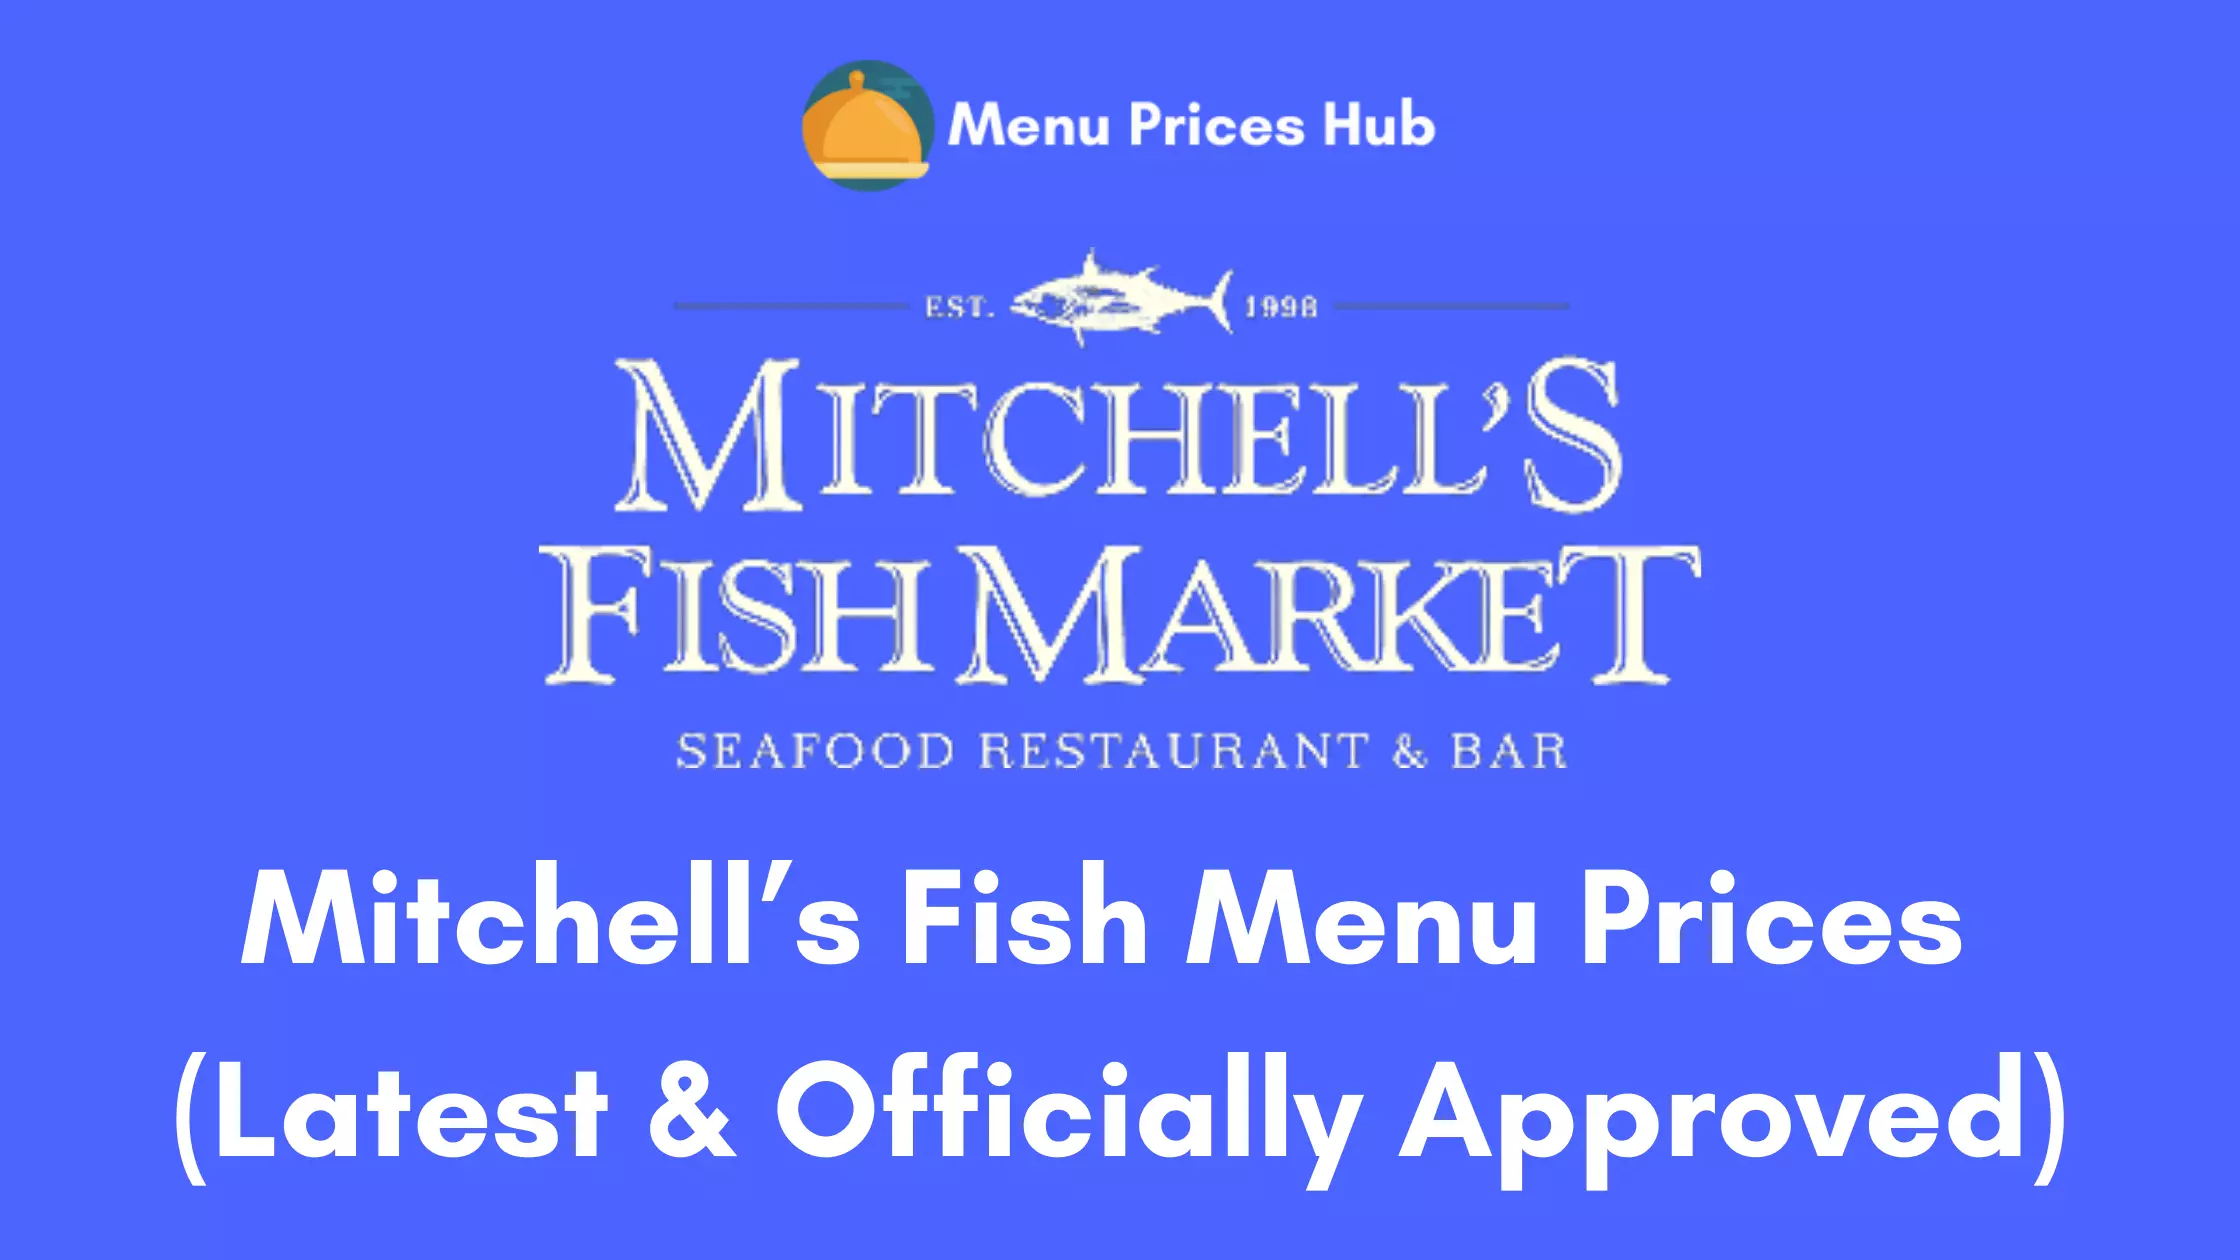 Mitchell’s Fish Menu Prices